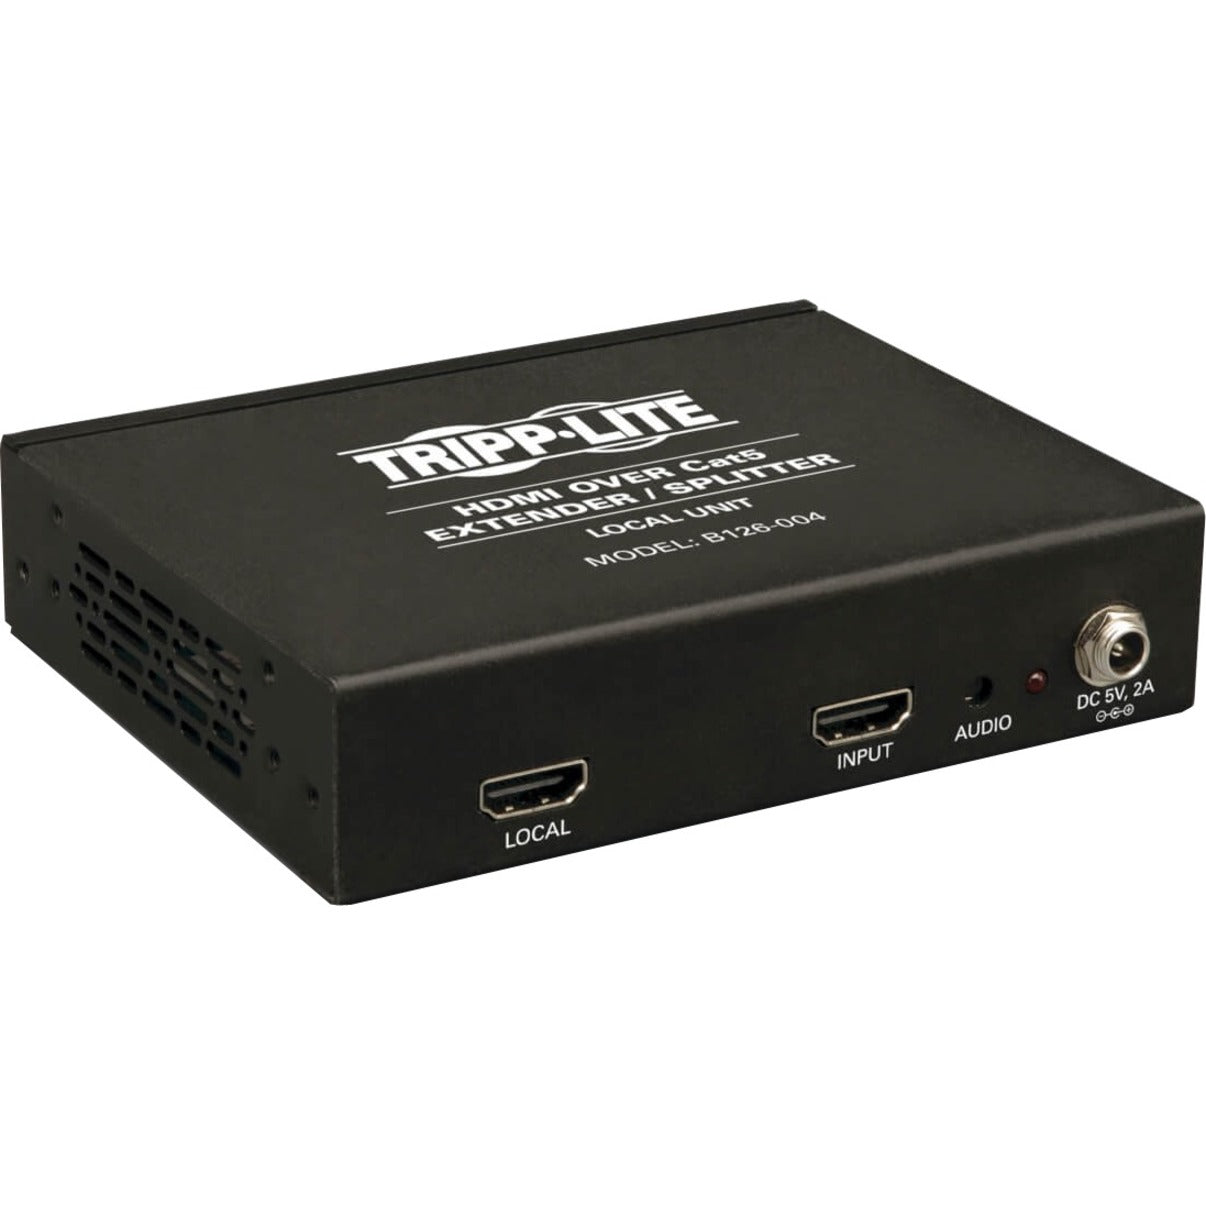 Tripp Lite B126-004 Video Extender Transmitter, HDMI Over CAT-5/6 4-Port Transmitter